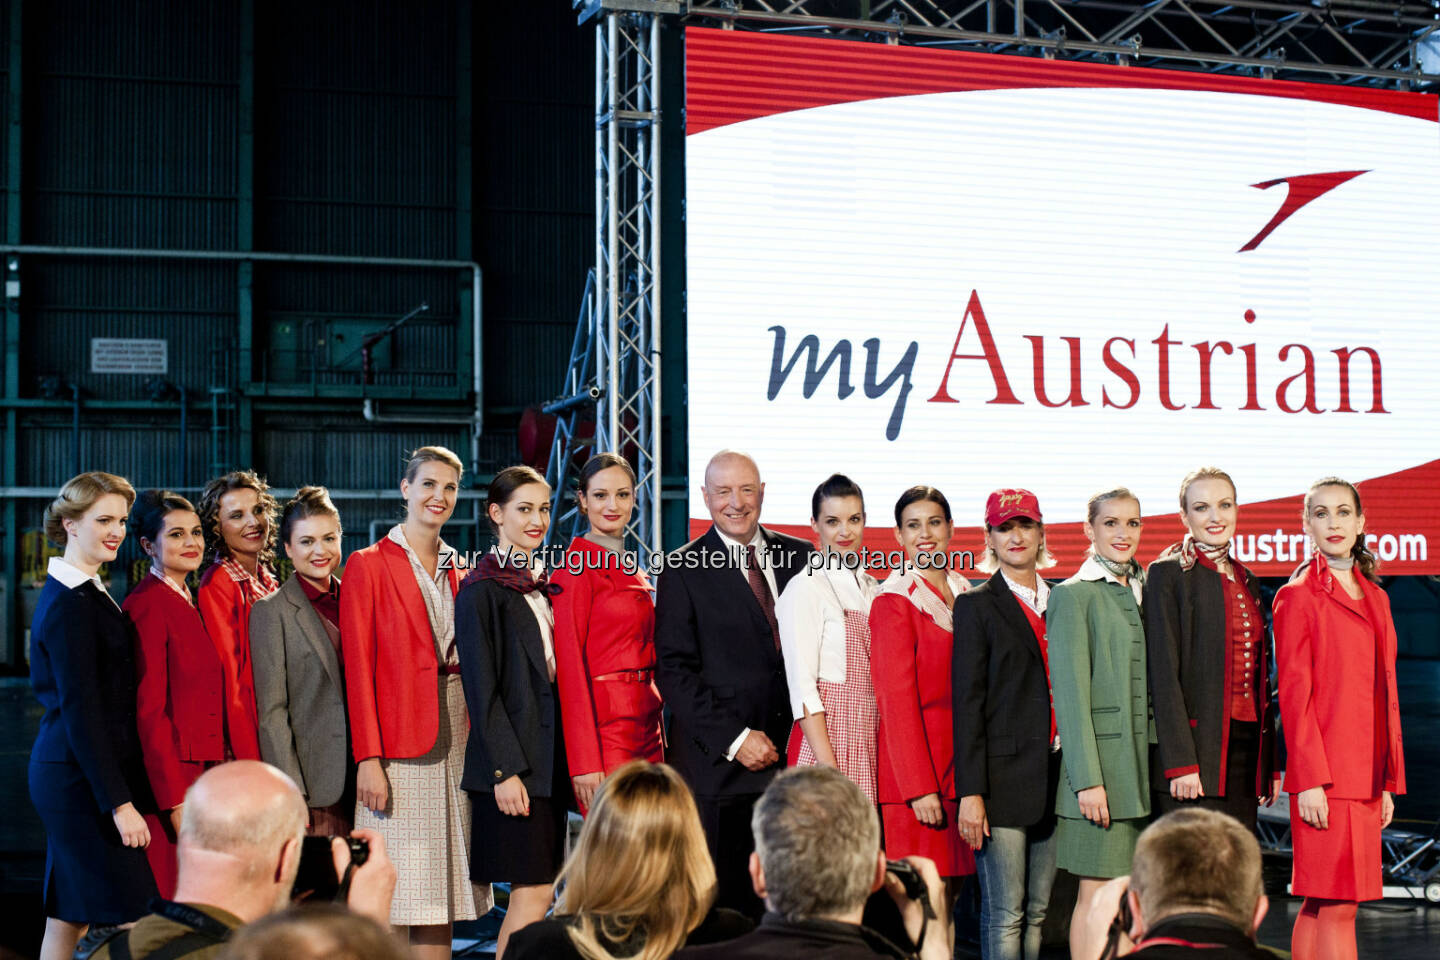 Kay Kratky (zukünftiger CEO Austrian) mit Crew in Uniform (Copyright: Austrian Airlines – Michele Pauty)